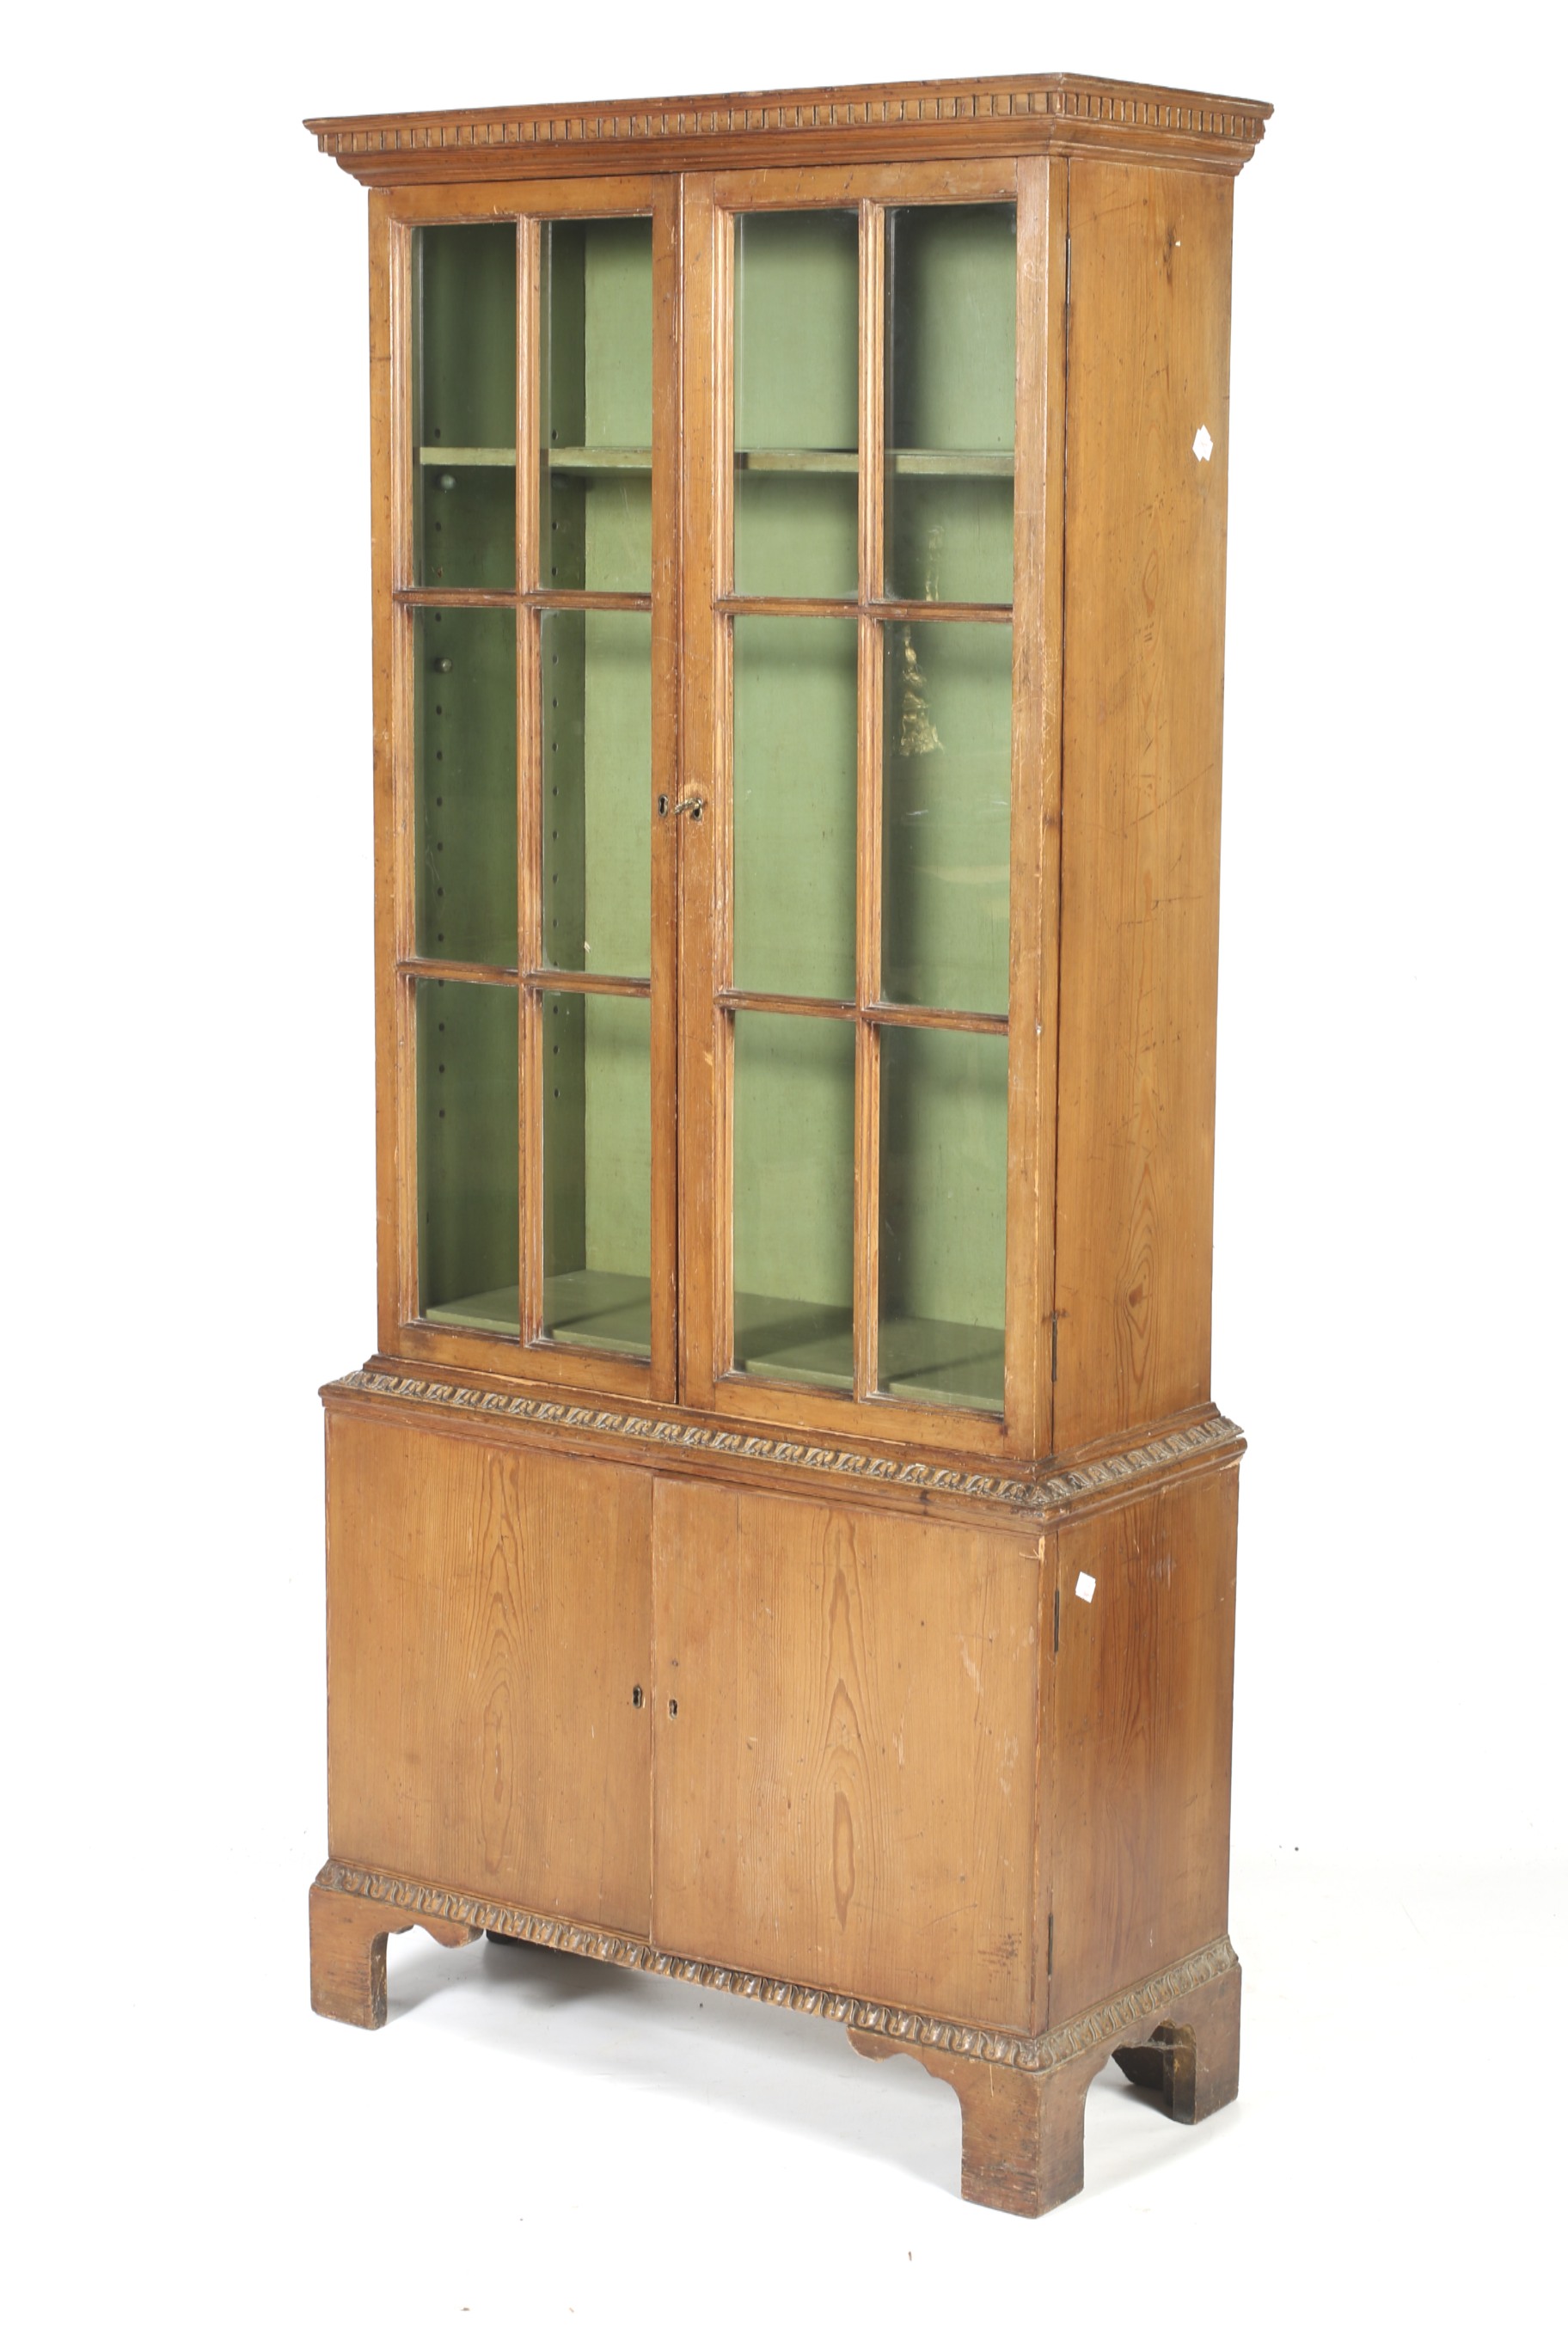 A vintage pine display cabinet.